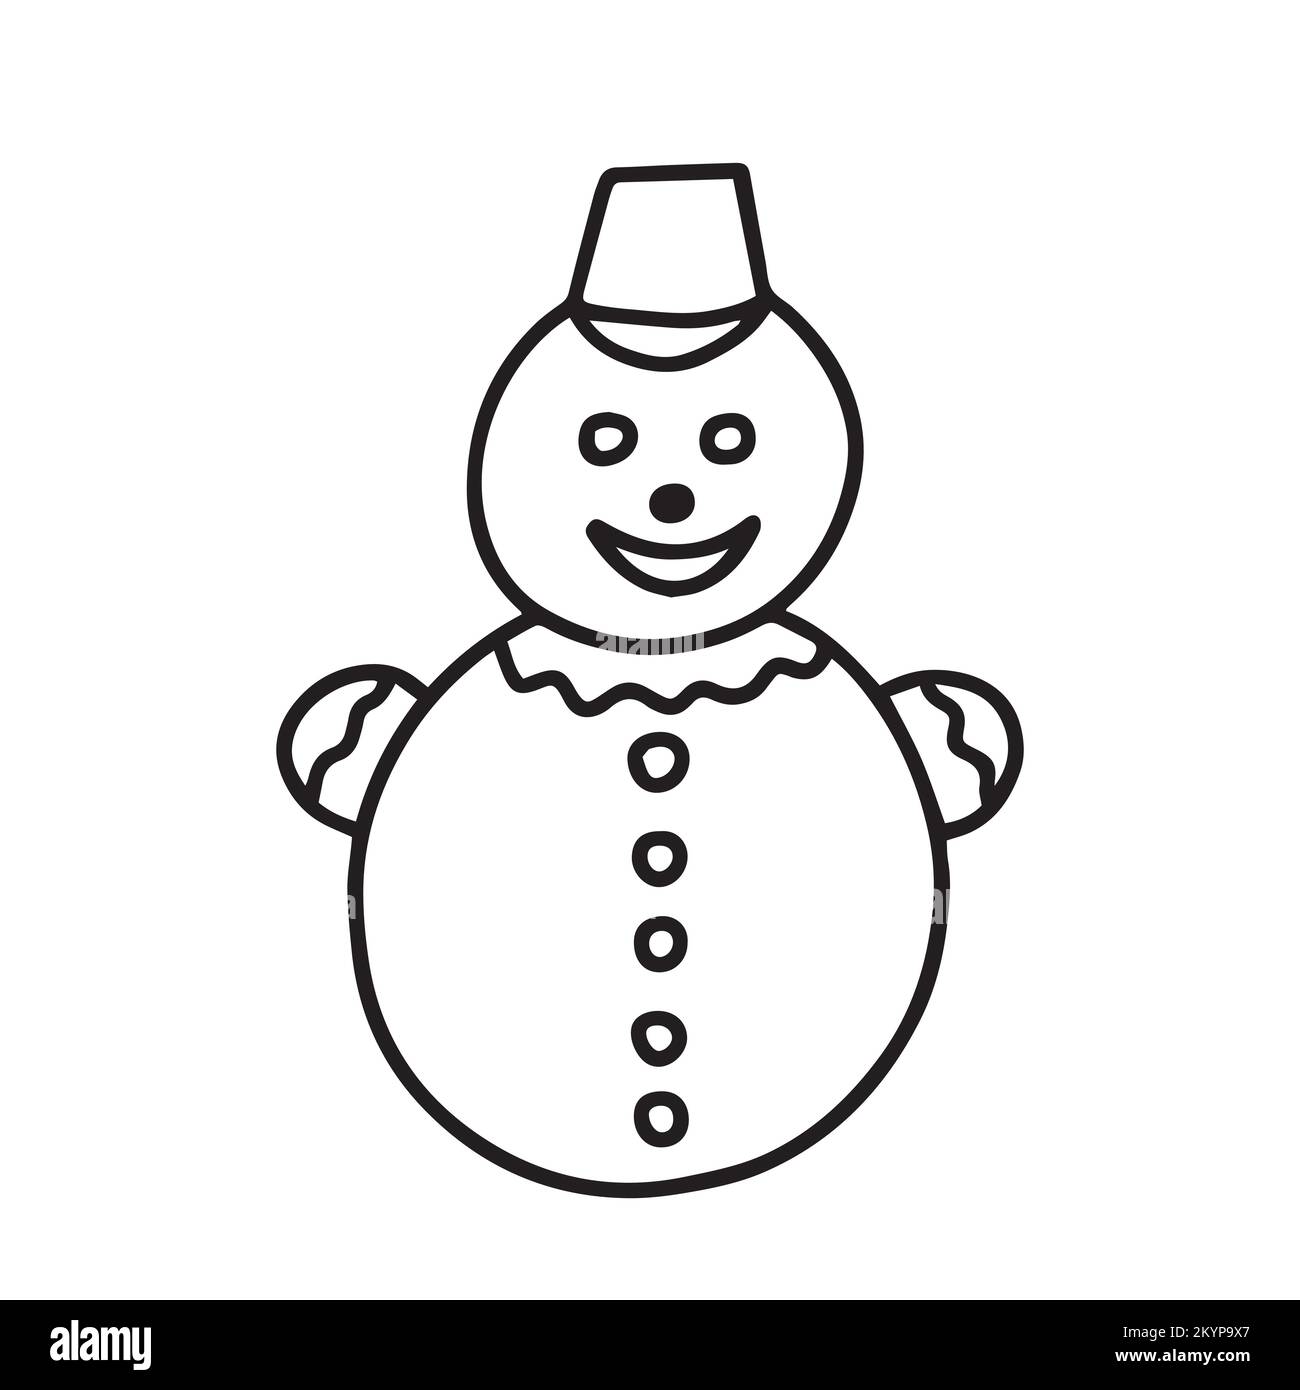 Ginger snowman doodle vector Stock Vector